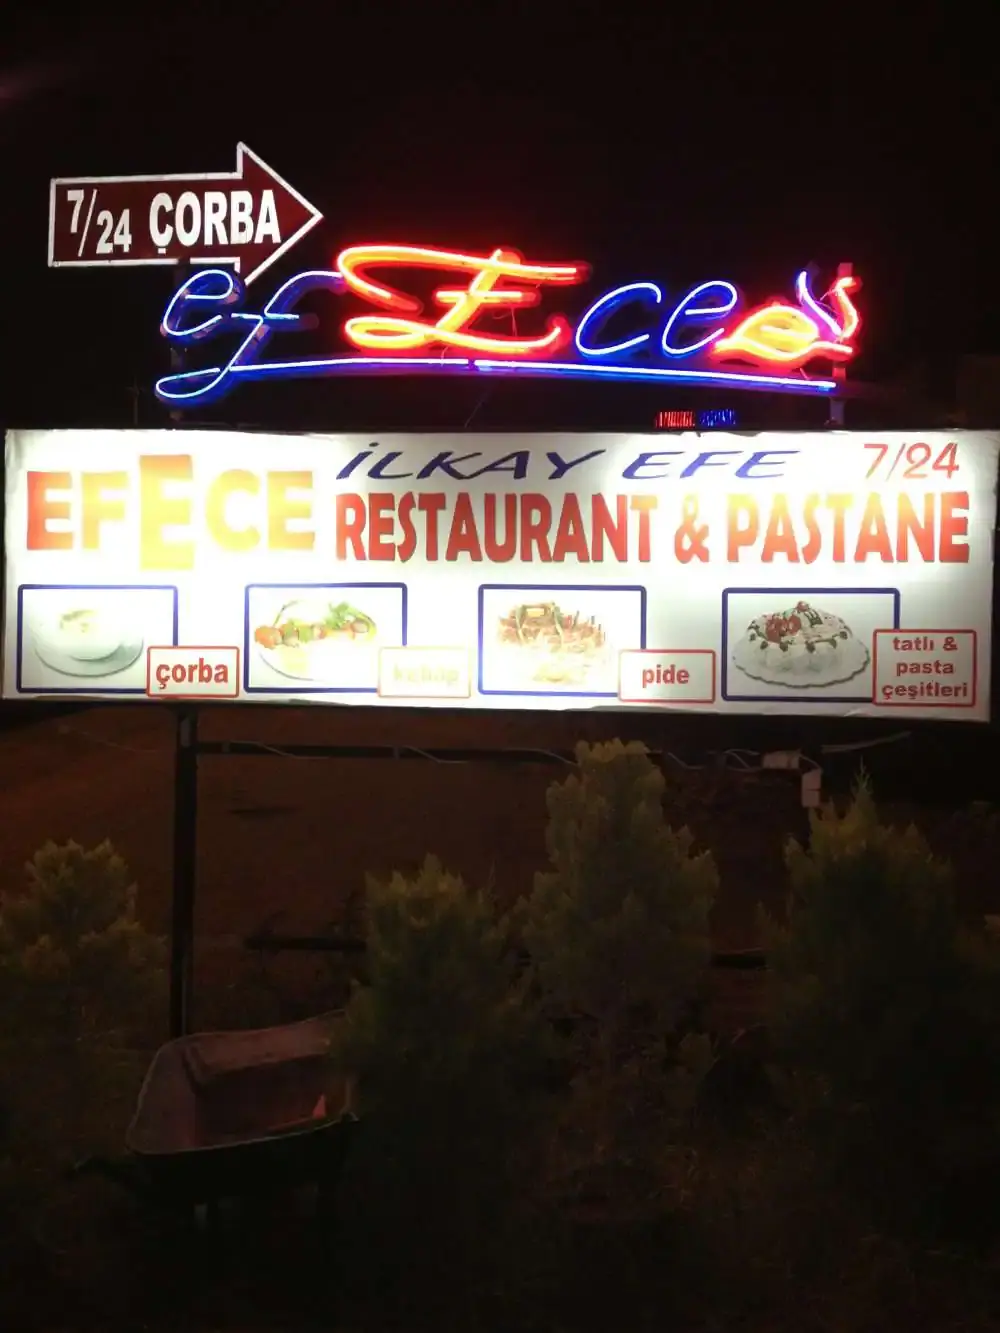 Efece Restorant & Pastane